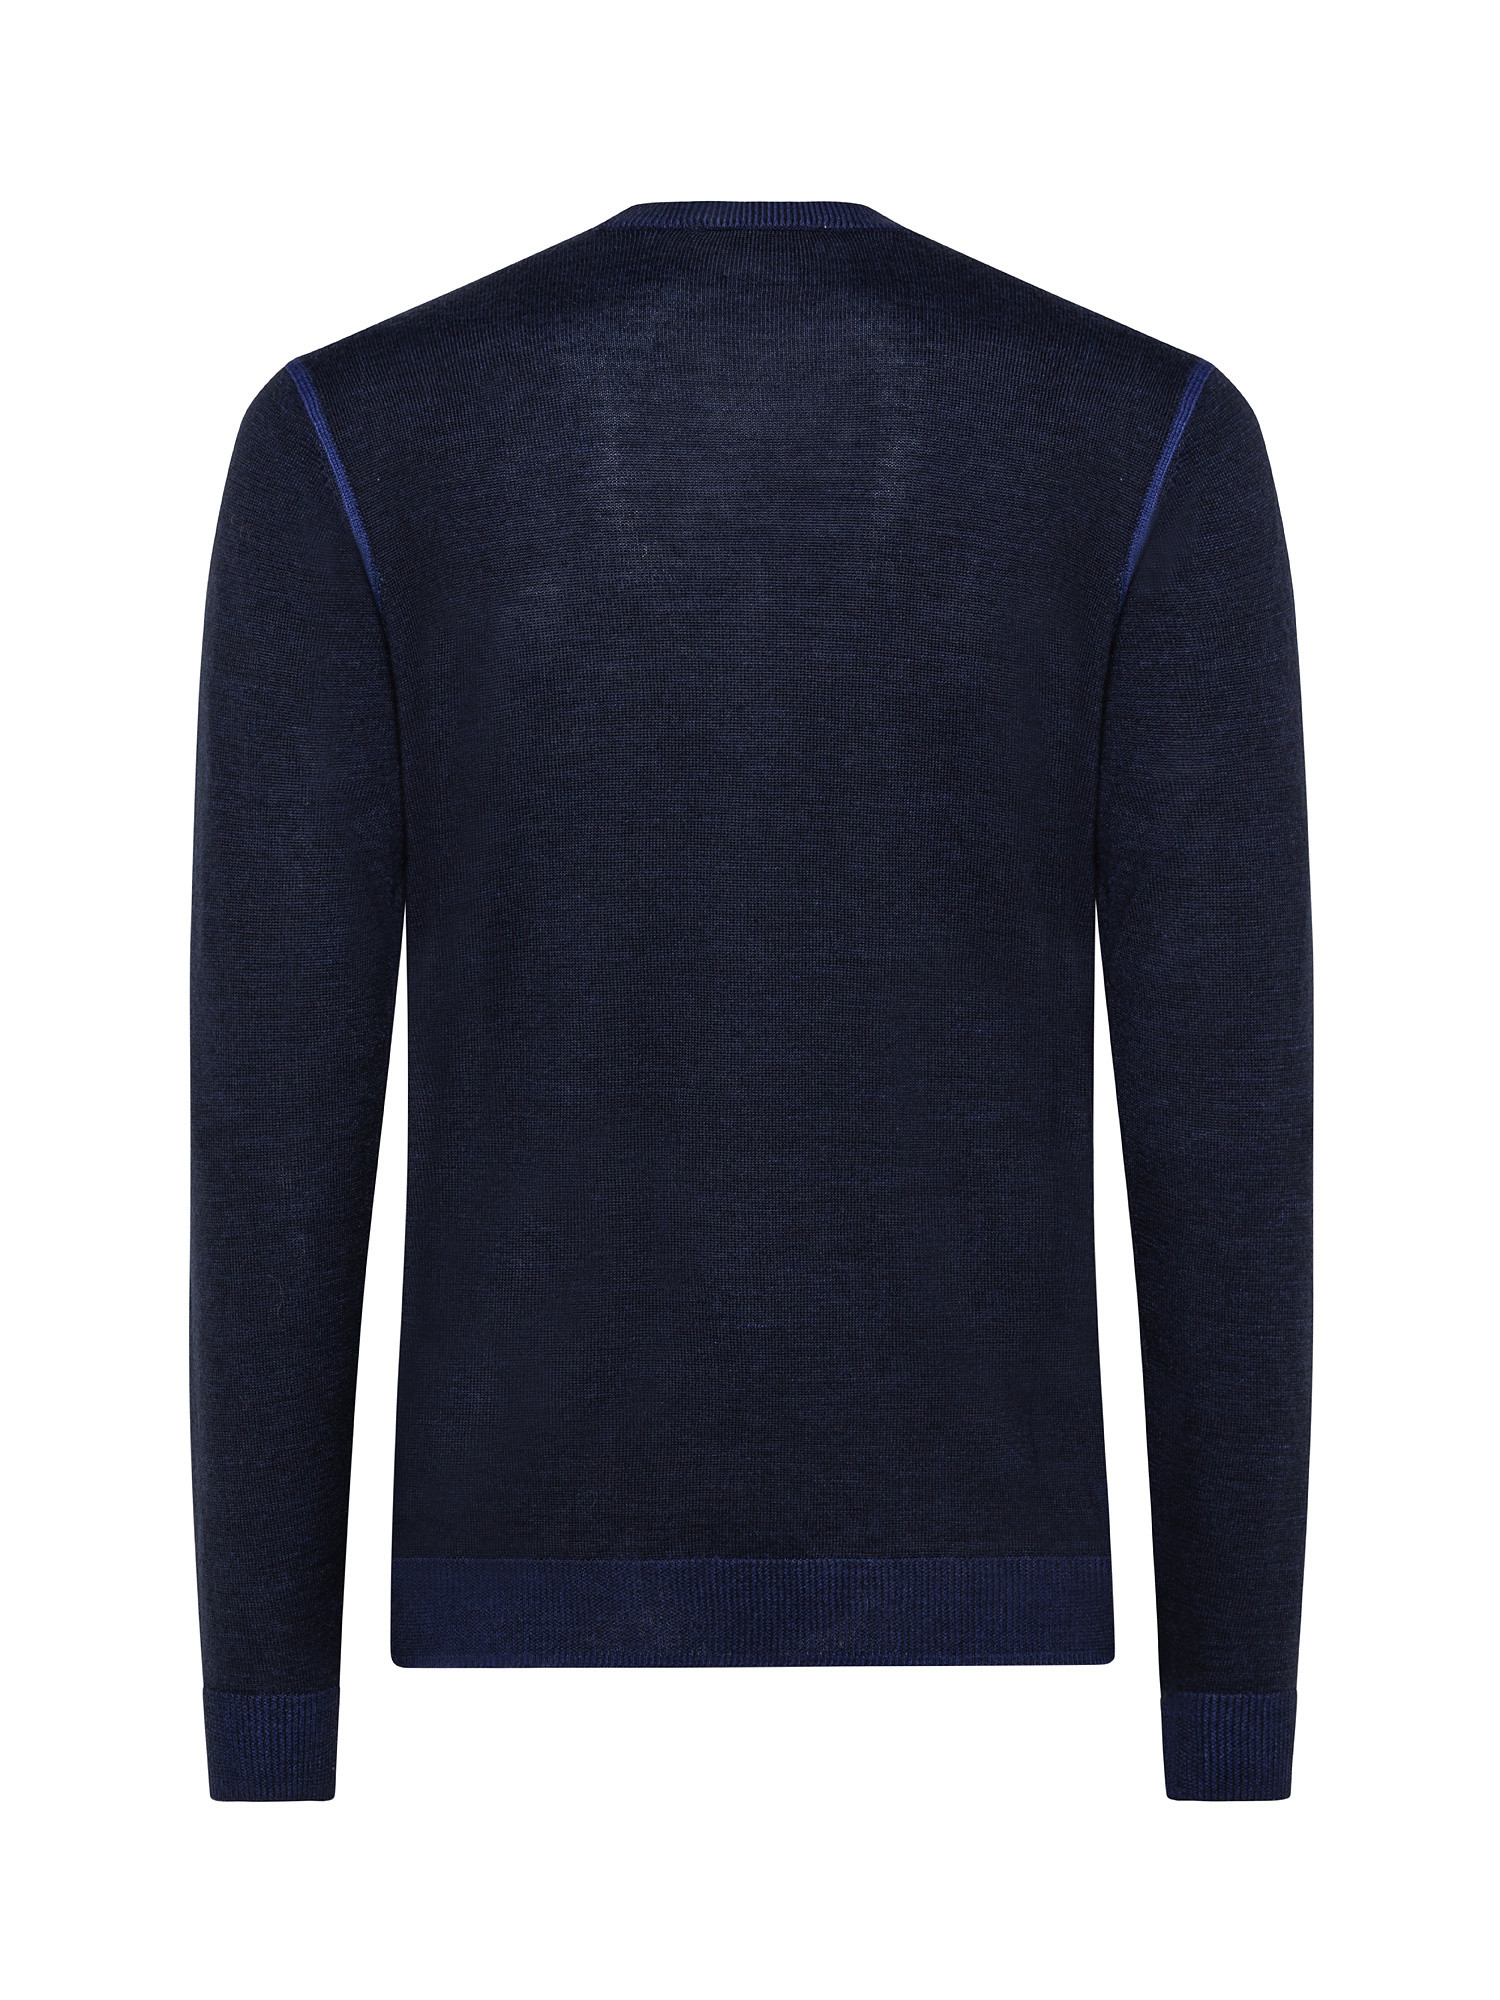 Wool blend crewneck sweater, Blue, large image number 1